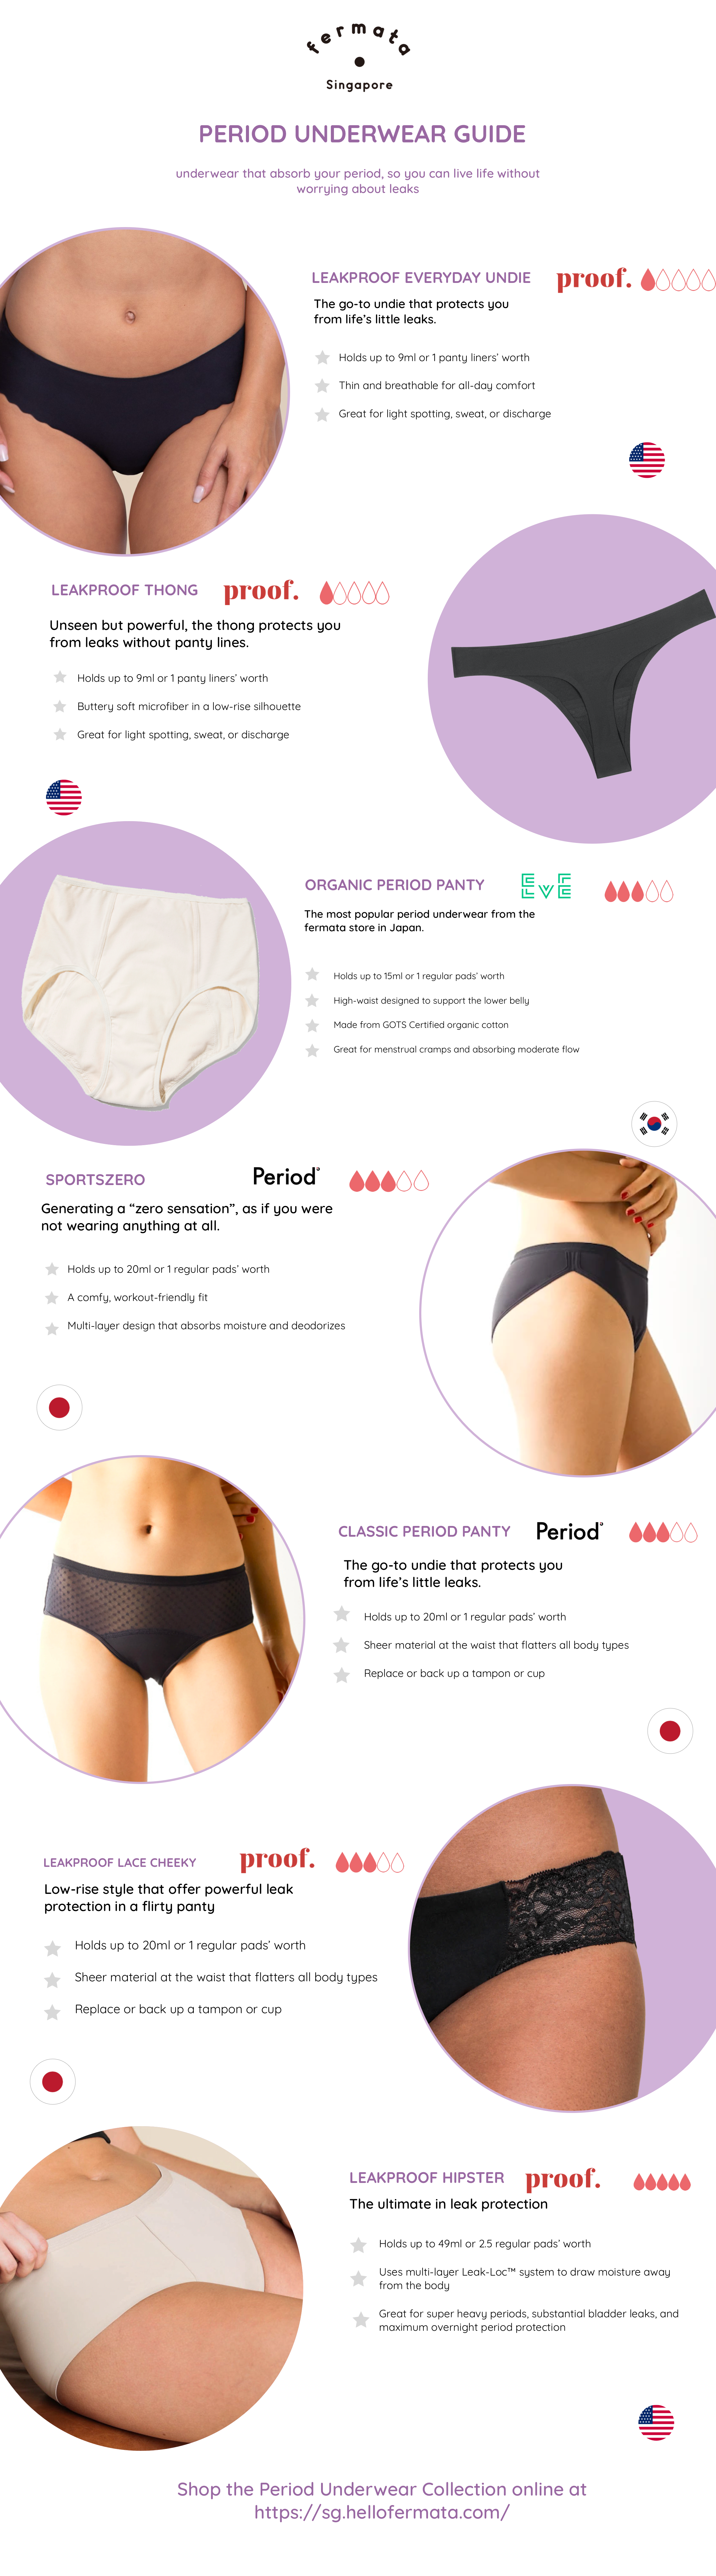 period underwear guide singapore